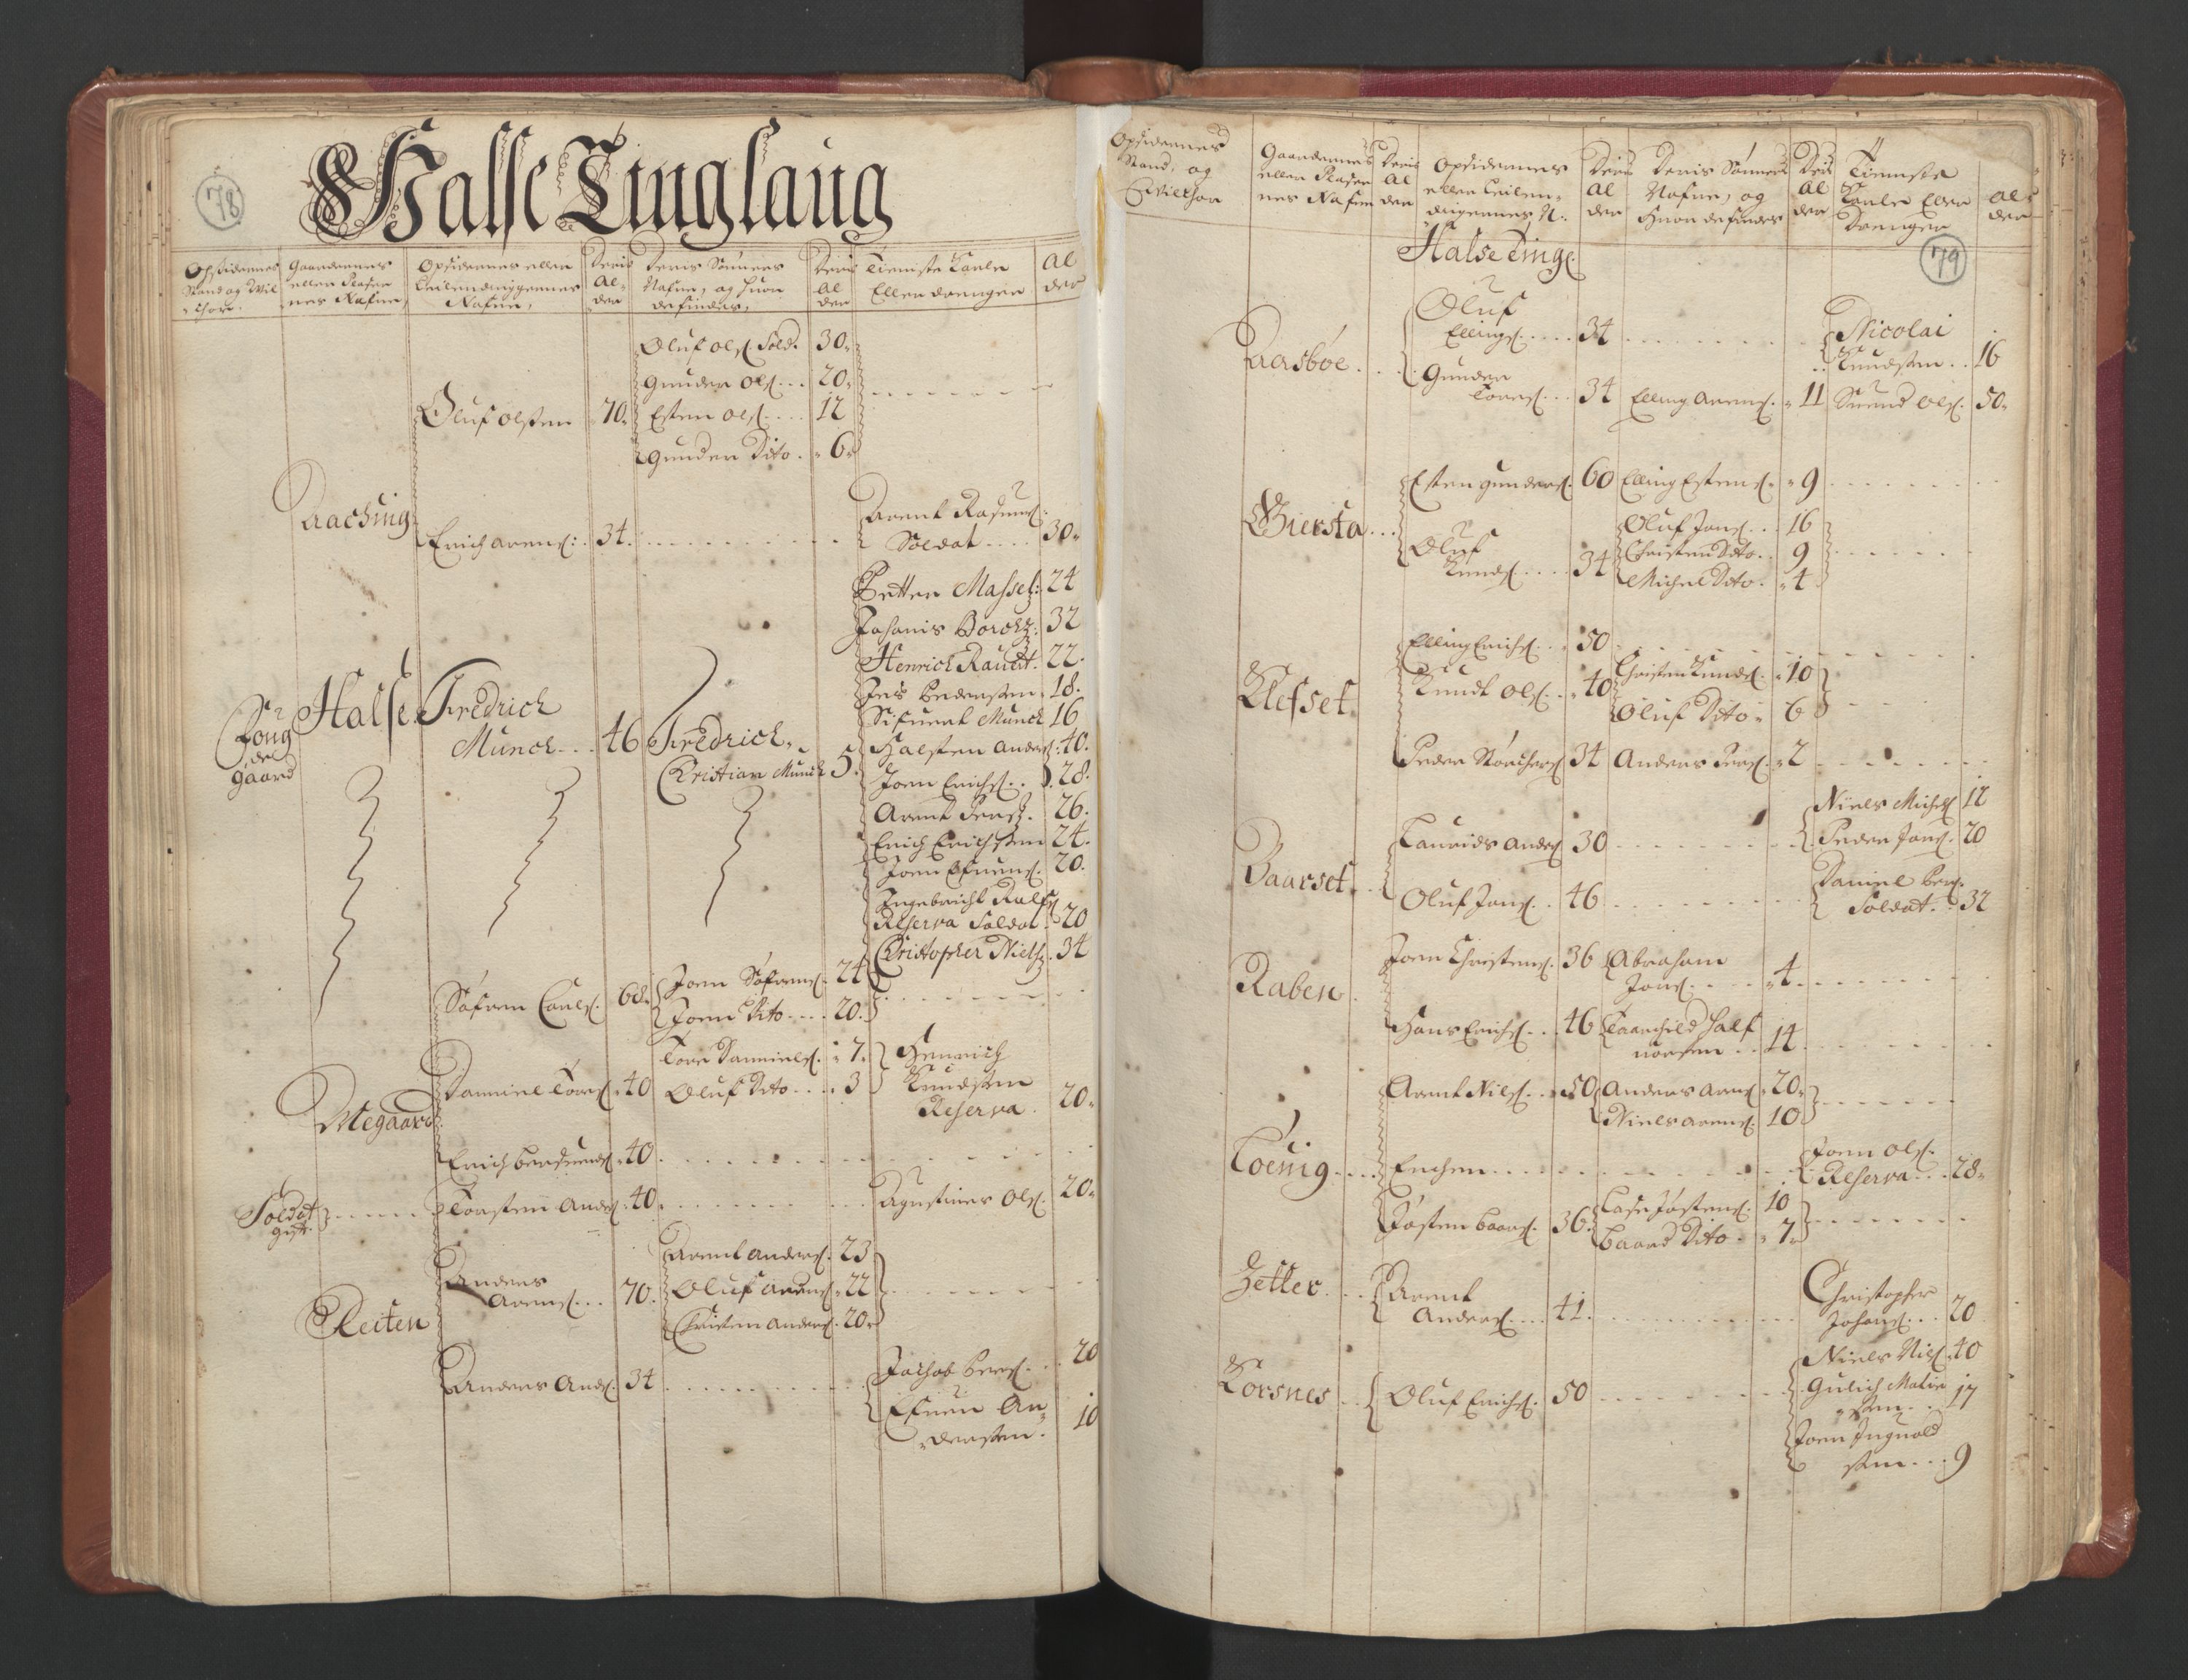 RA, Census (manntall) 1701, no. 11: Nordmøre fogderi and Romsdal fogderi, 1701, p. 78-79